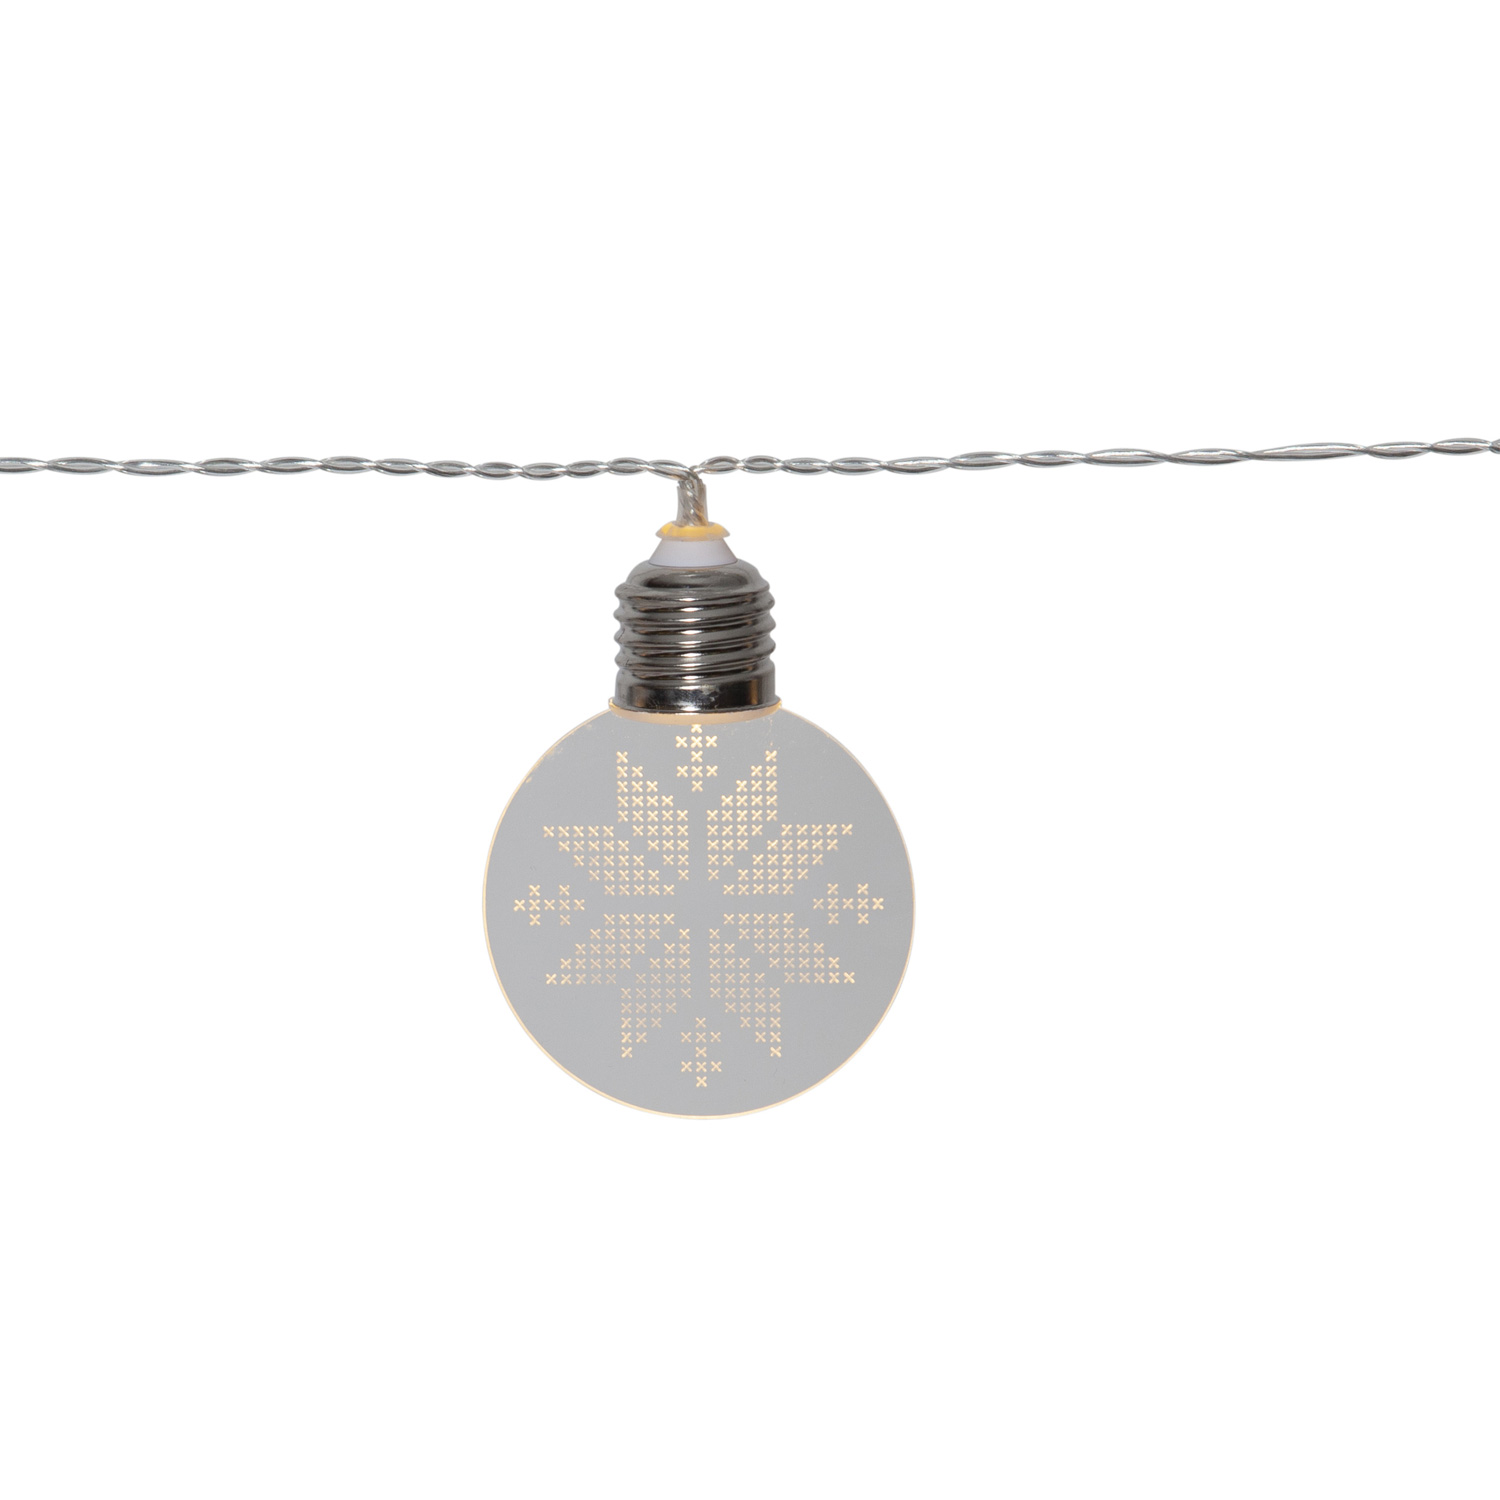 LED Lichterkette "Ornament" - 10 warmweiße LED - Batteriebetrieb - Timer - L: 1,8m - transparent